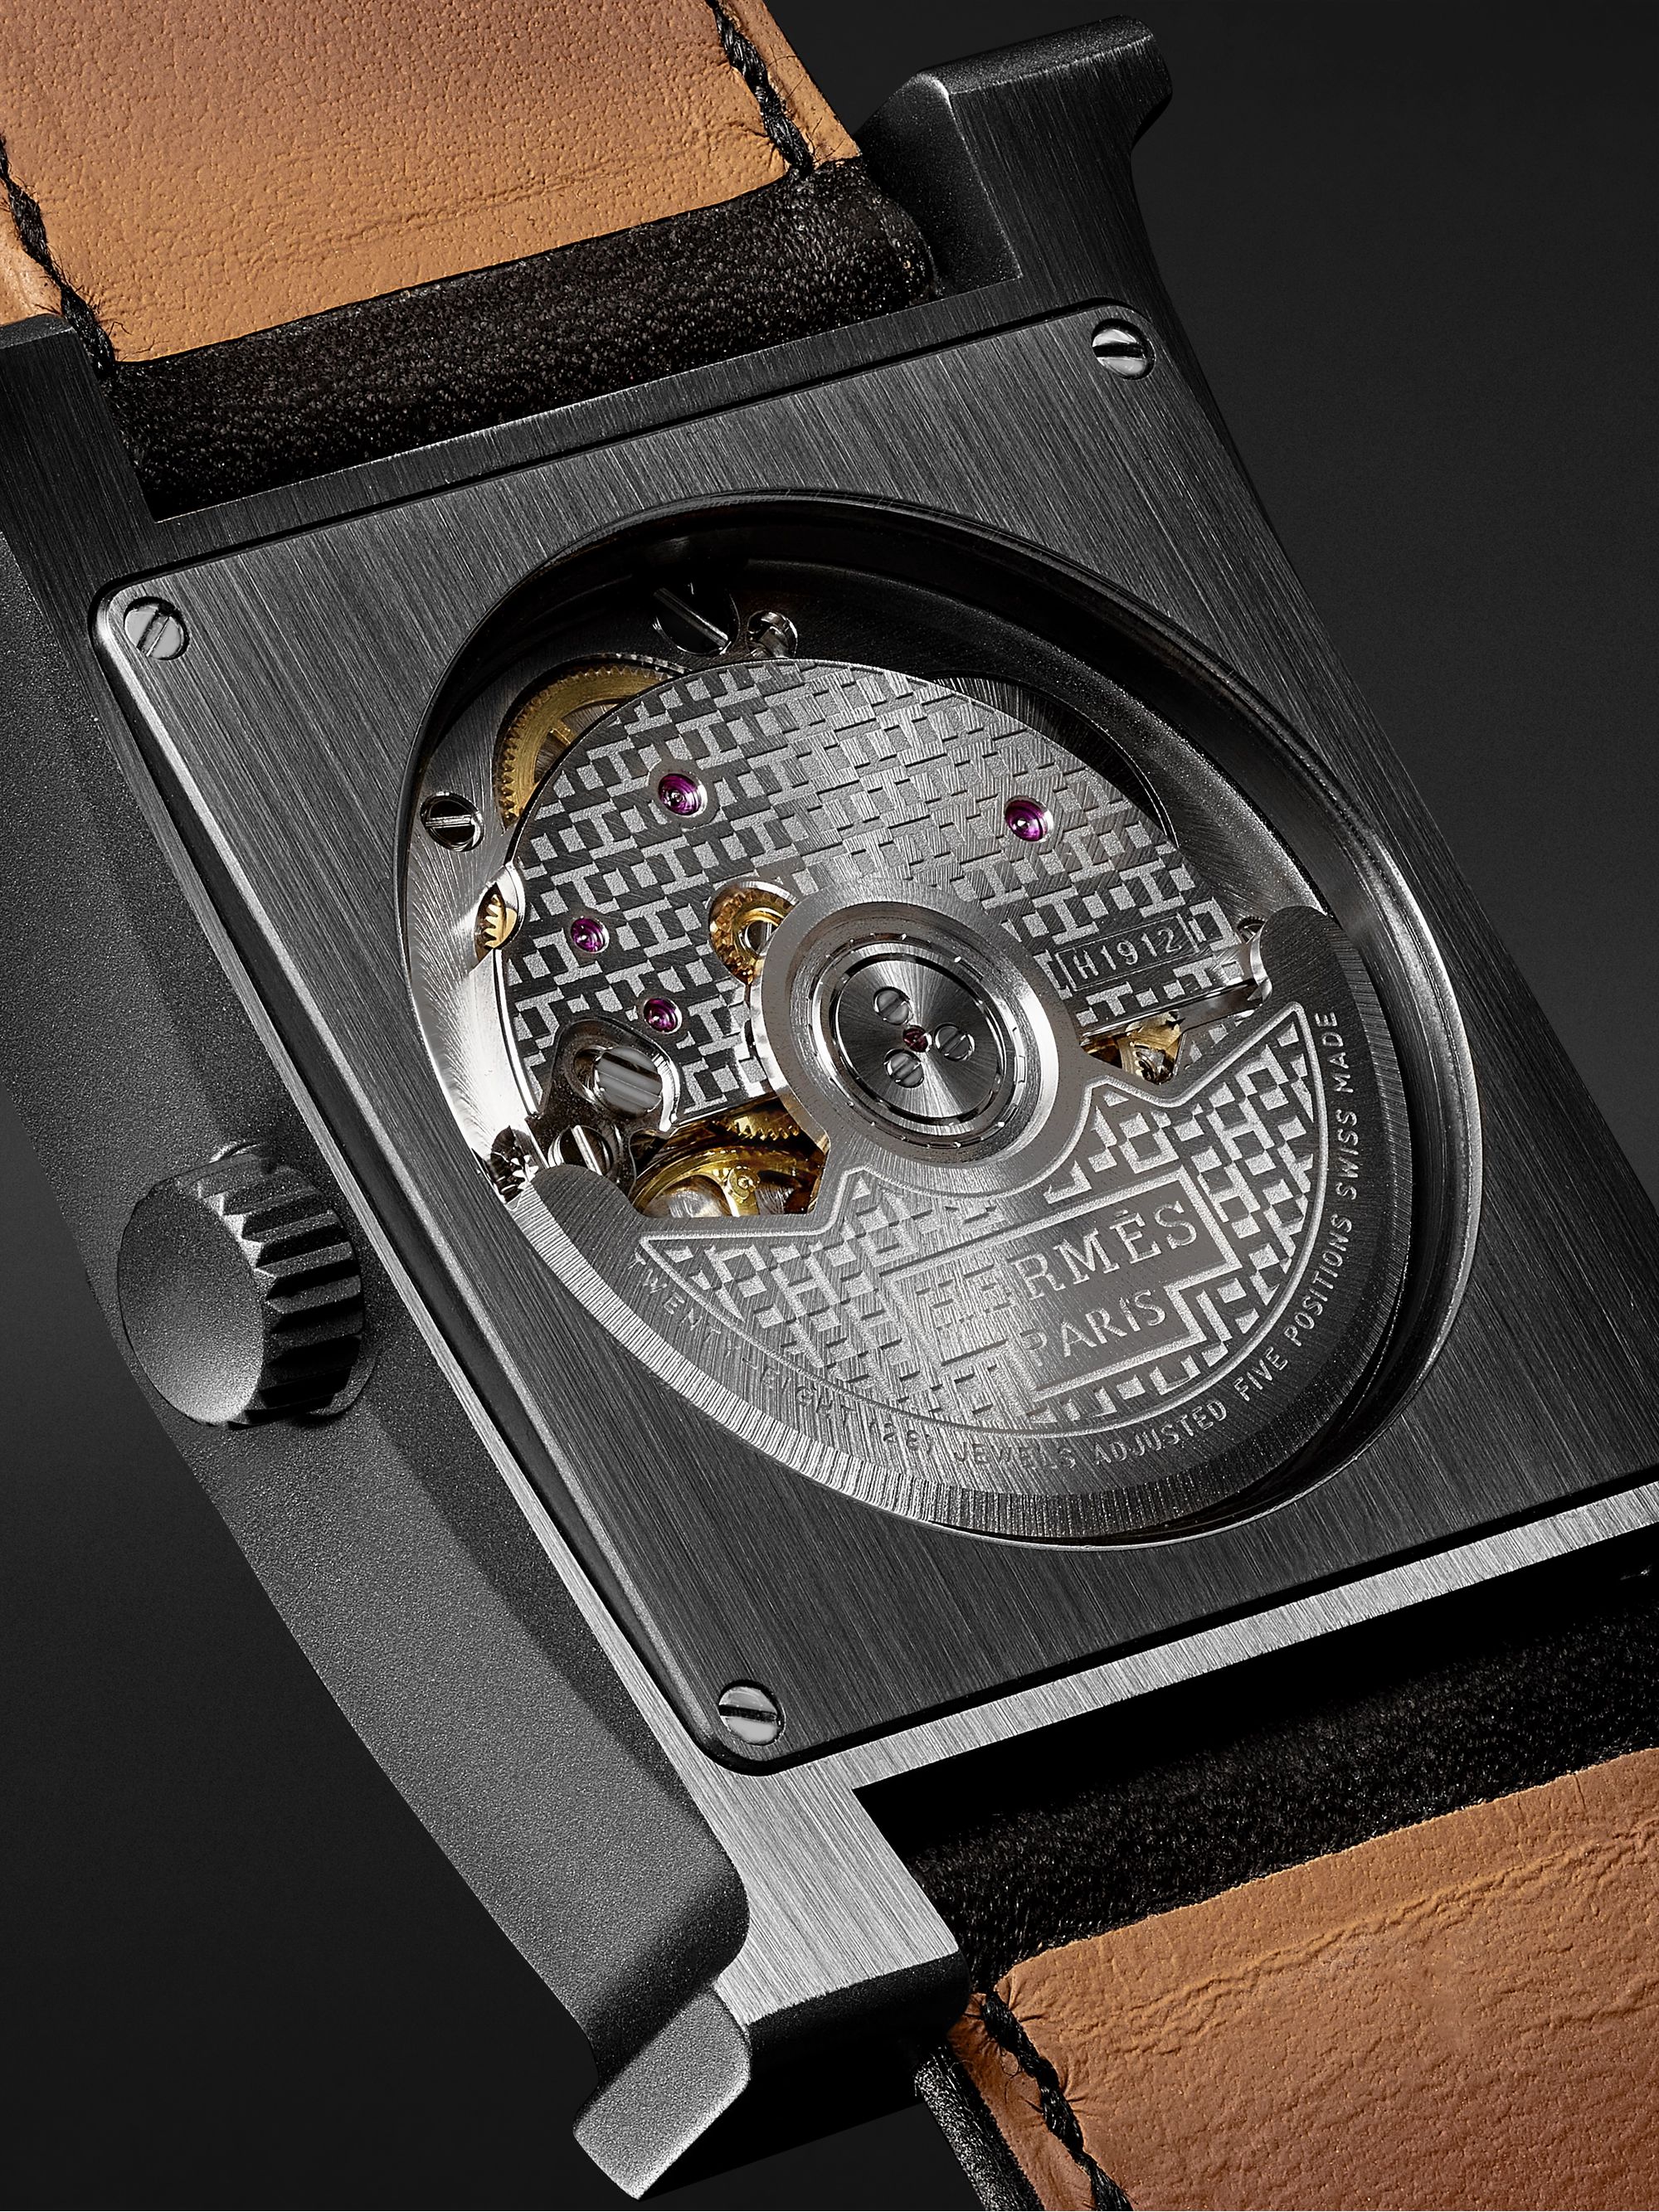 HERMÈS TIMEPIECES Heure H Large Automatic 30.5mm Titanium Watch, Ref. No. W054131WW00